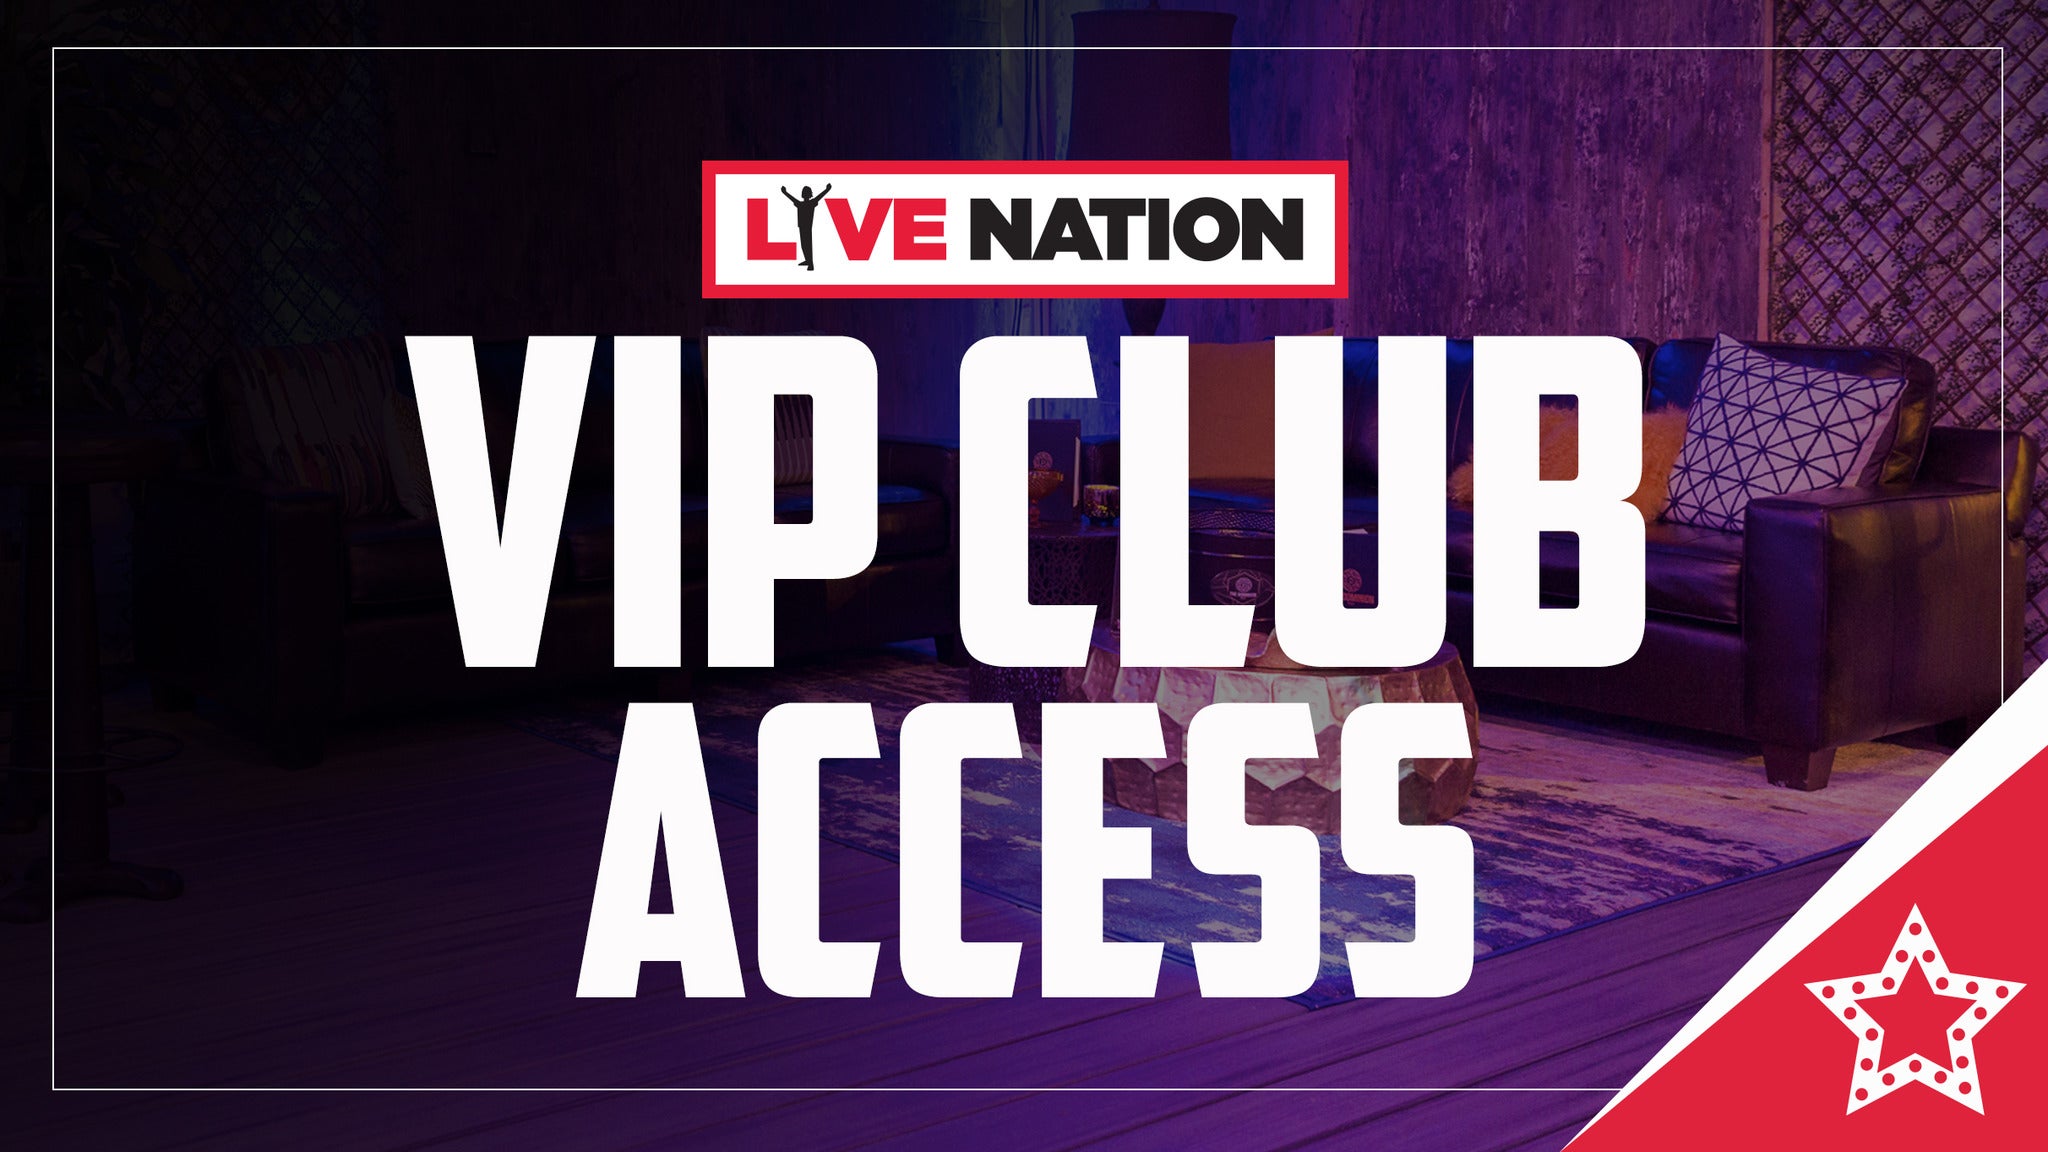 Live Nation VIP Club Access presale information on freepresalepasswords.com